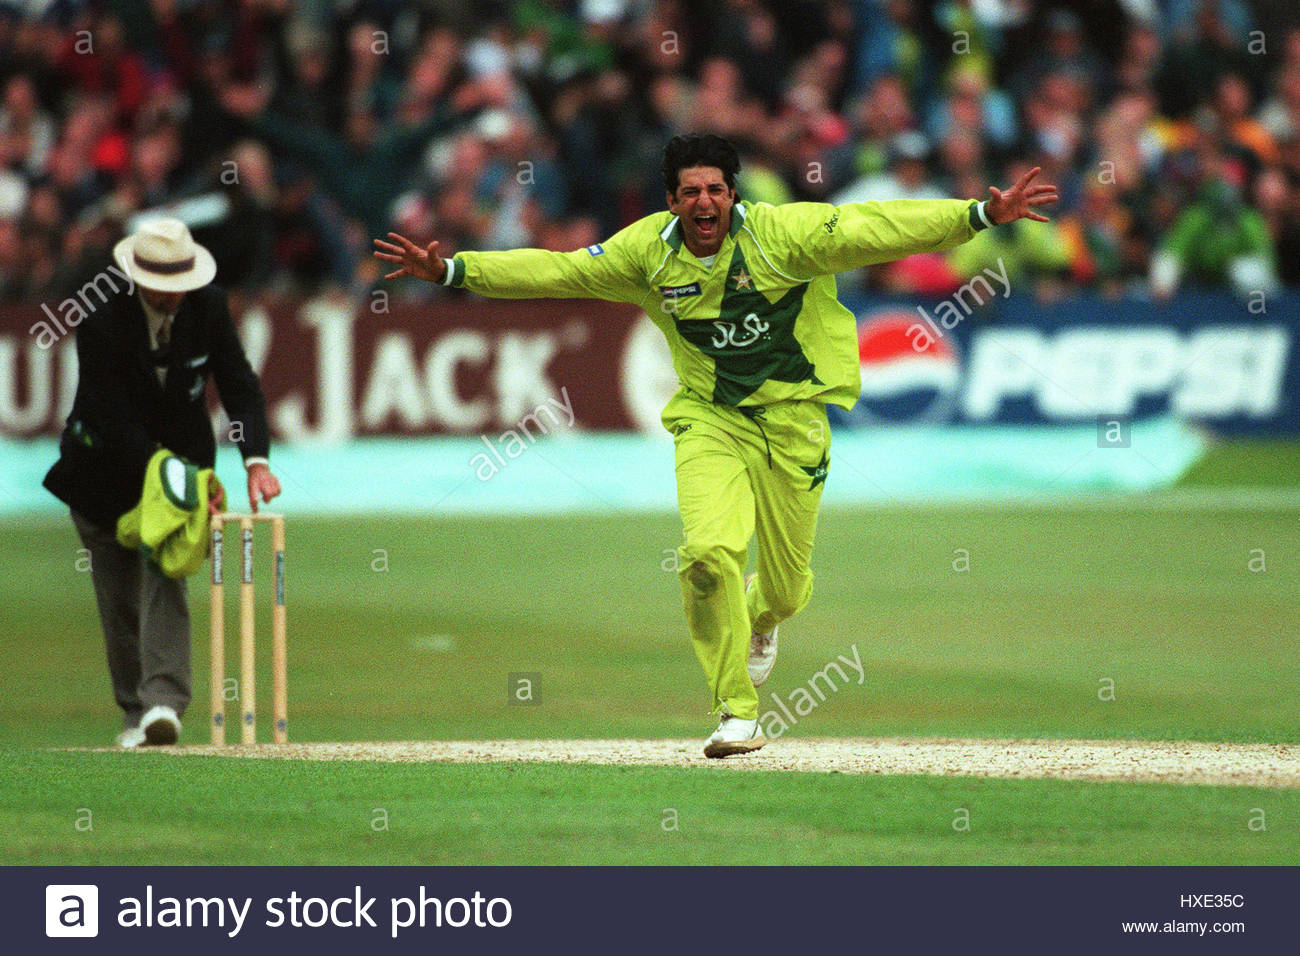 Wasim Akram Roaring After Taking a Wicket